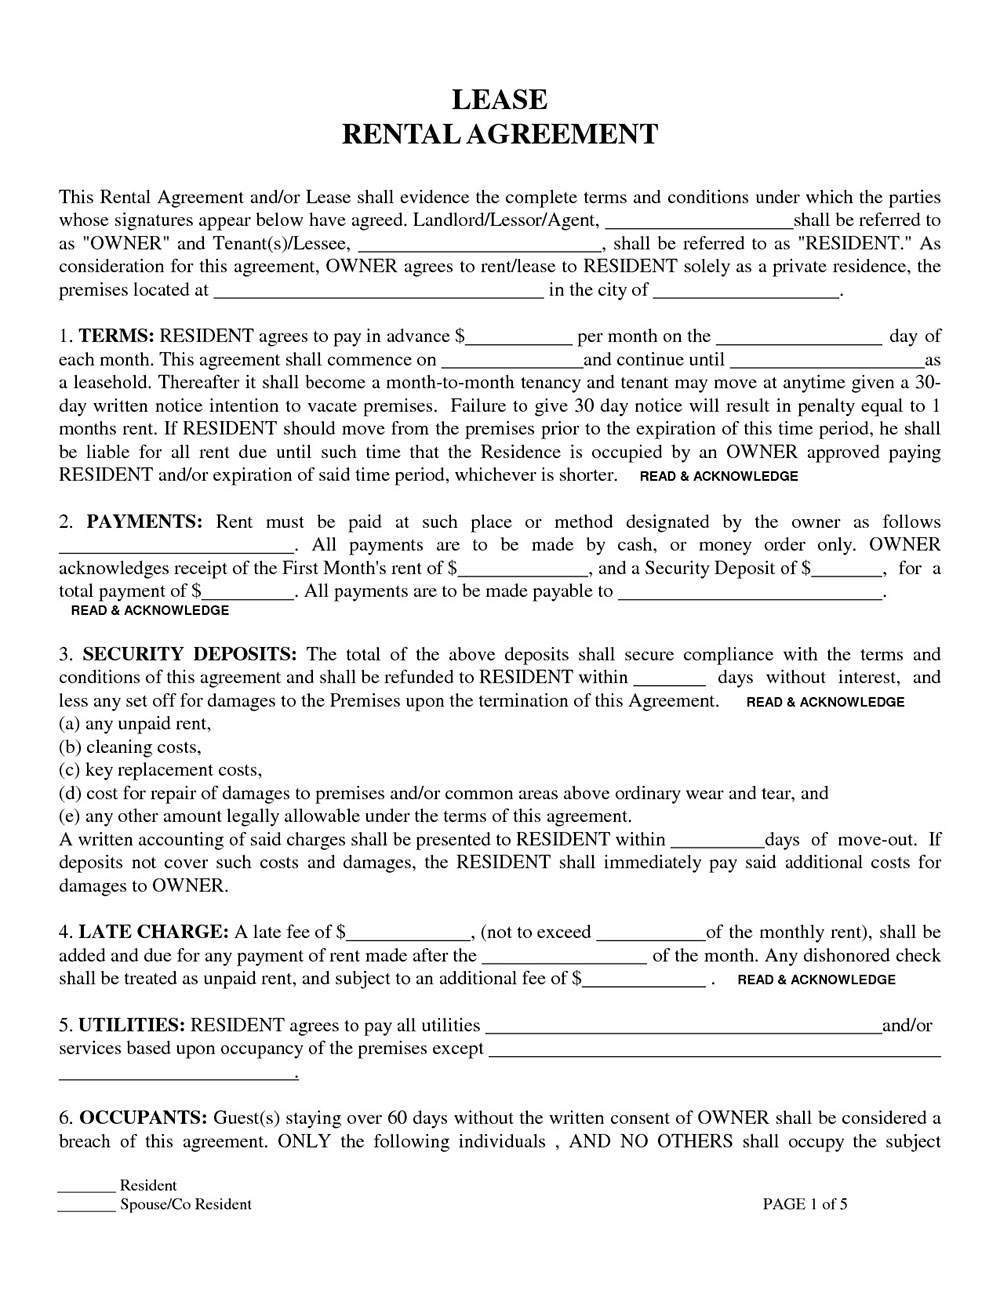 Online Samples Rental Agreements 650*841 - Free California Rental - Rental Agreement Forms Free Printable